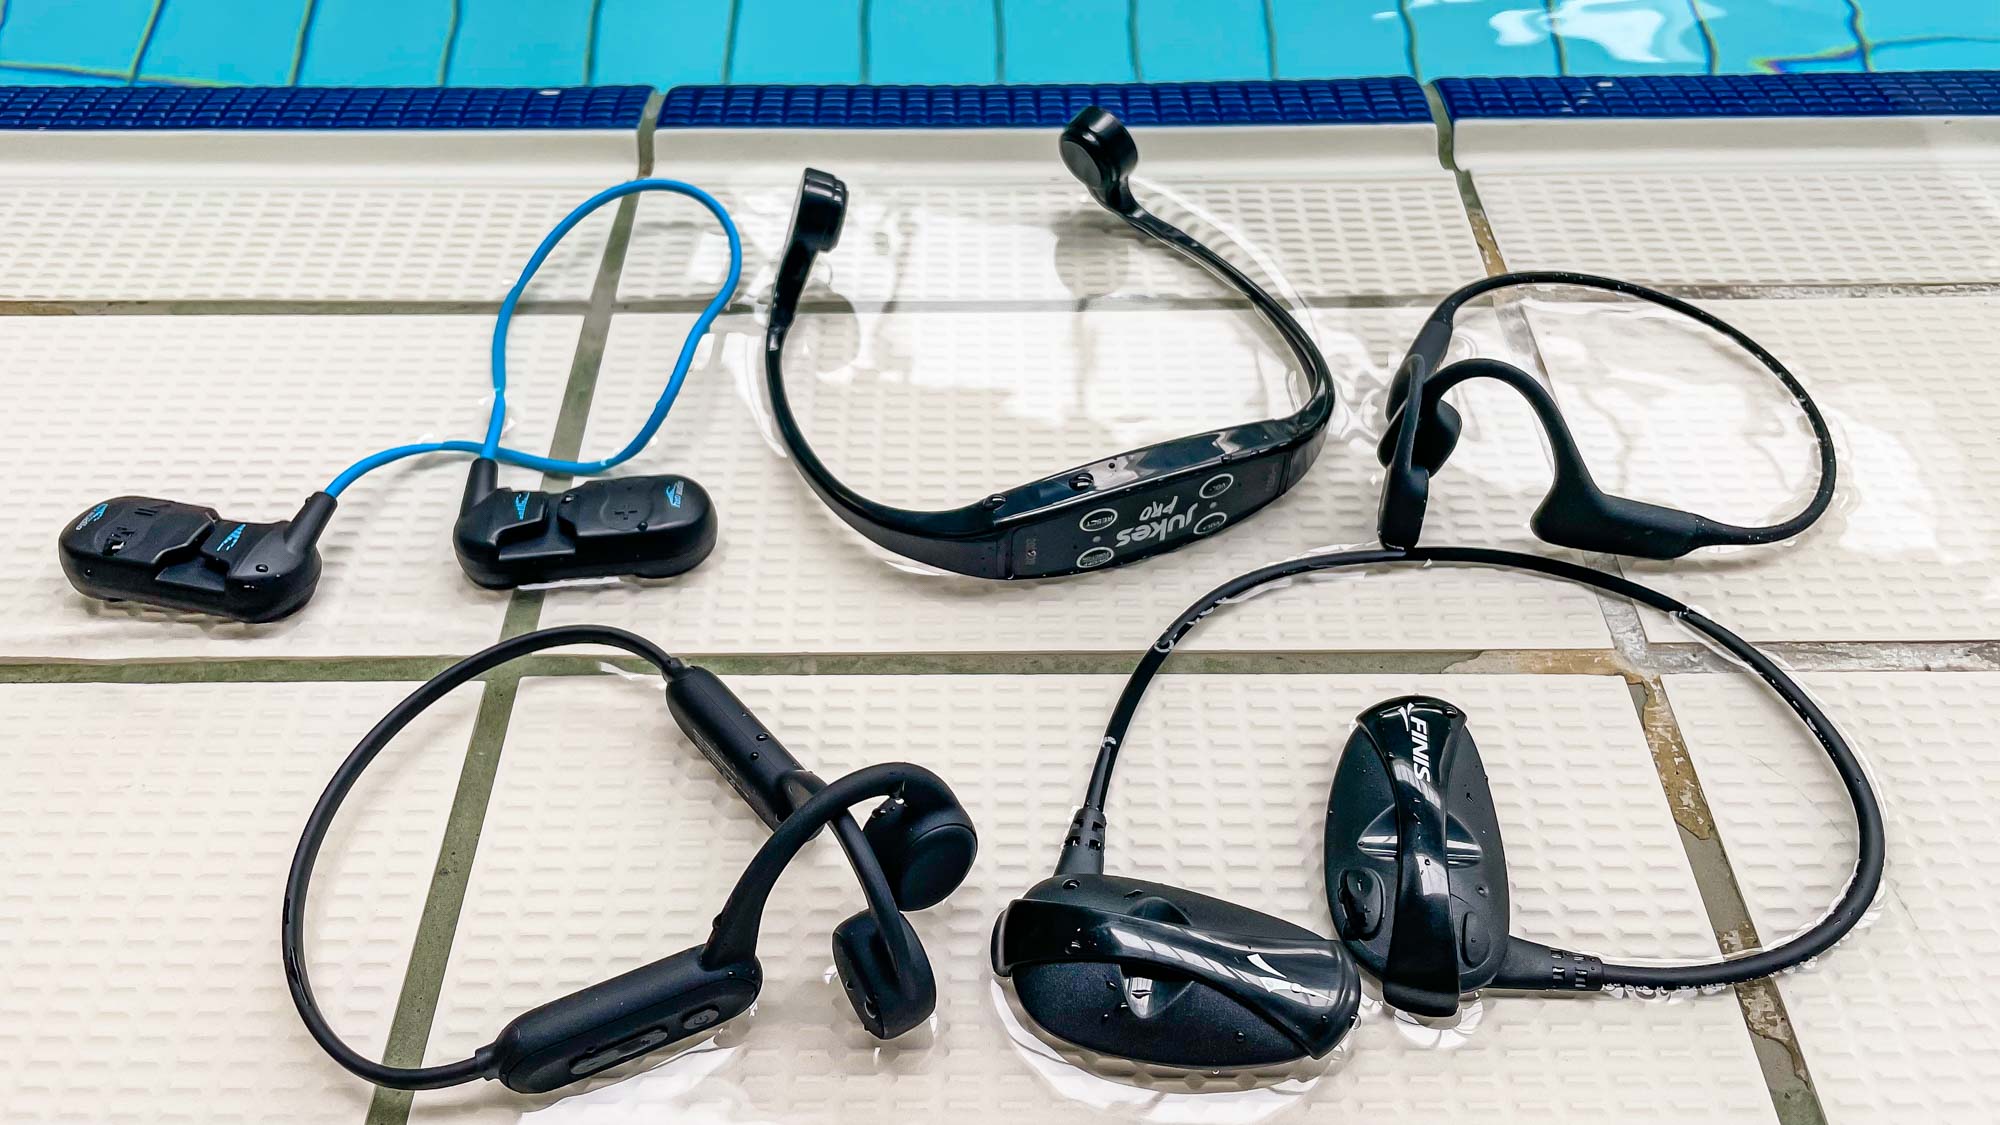 SHOKZ OpenSwim Swimming MP3 - Bone Conduction MP3 Waterproof Headphones for  Swimming - Open-Ear Wireless Headphones, No Bluetooth, with Earplug